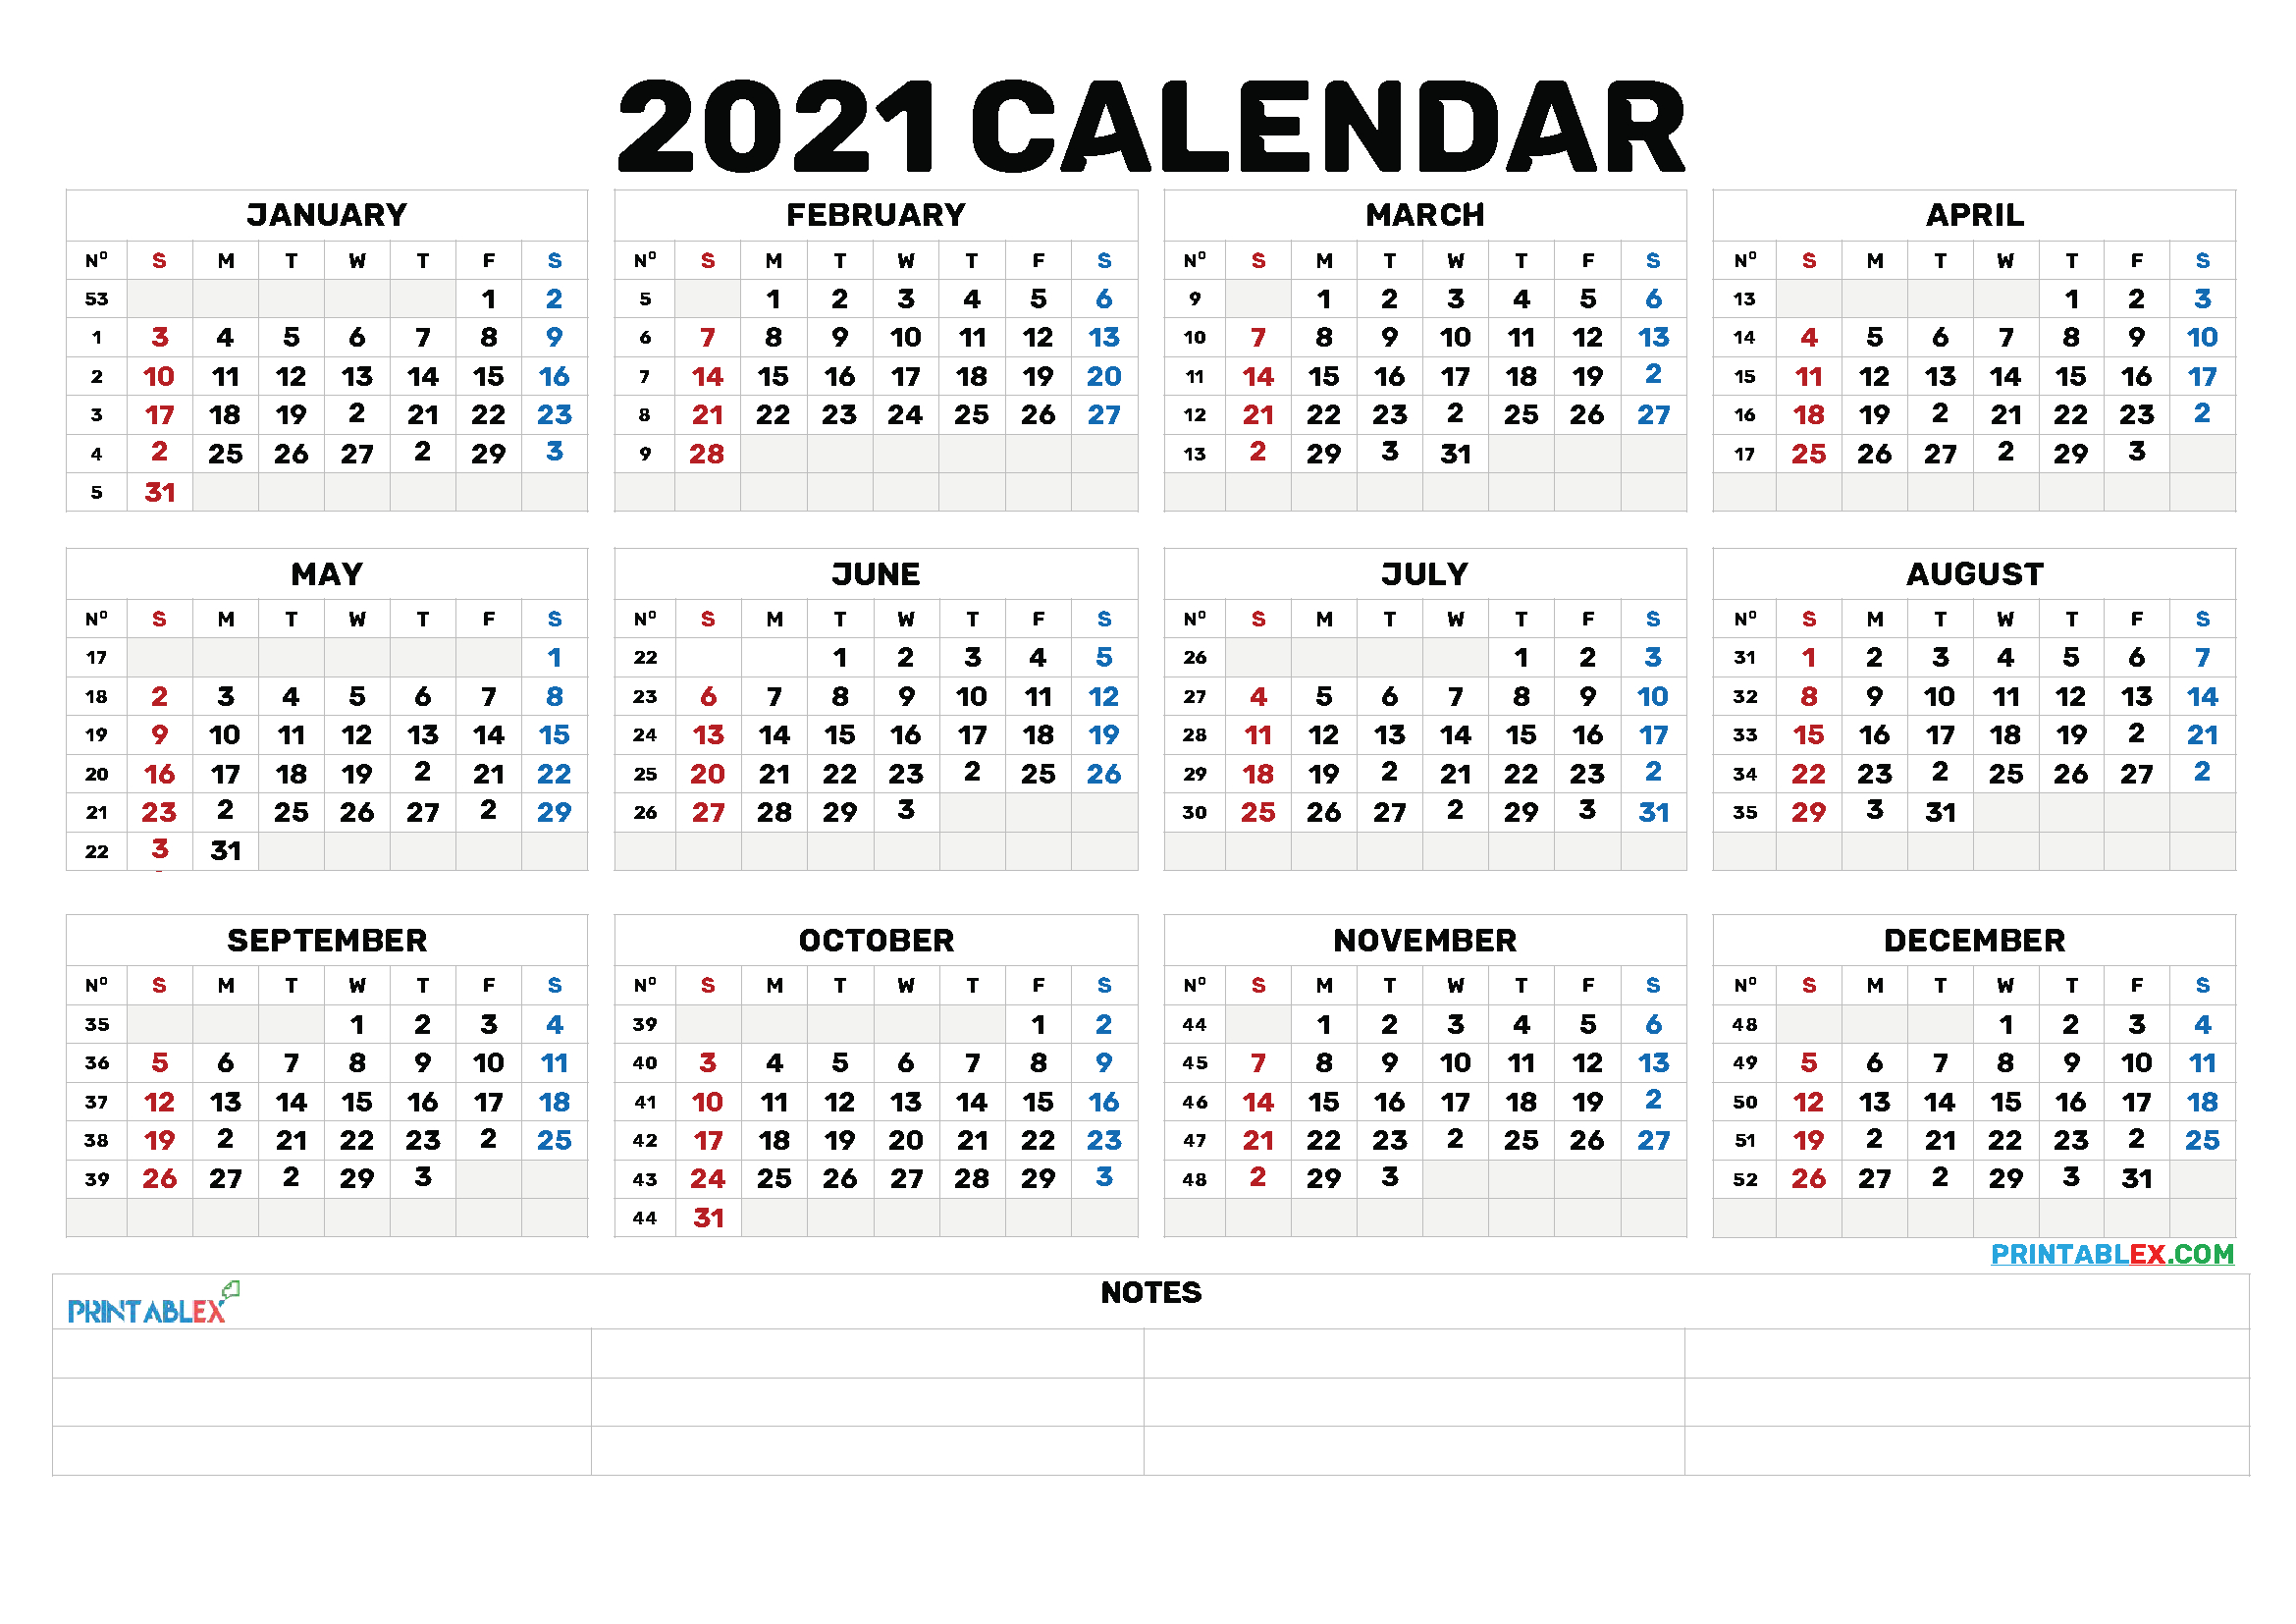 2021 Annual Calendar Printable Calendars 2021 1